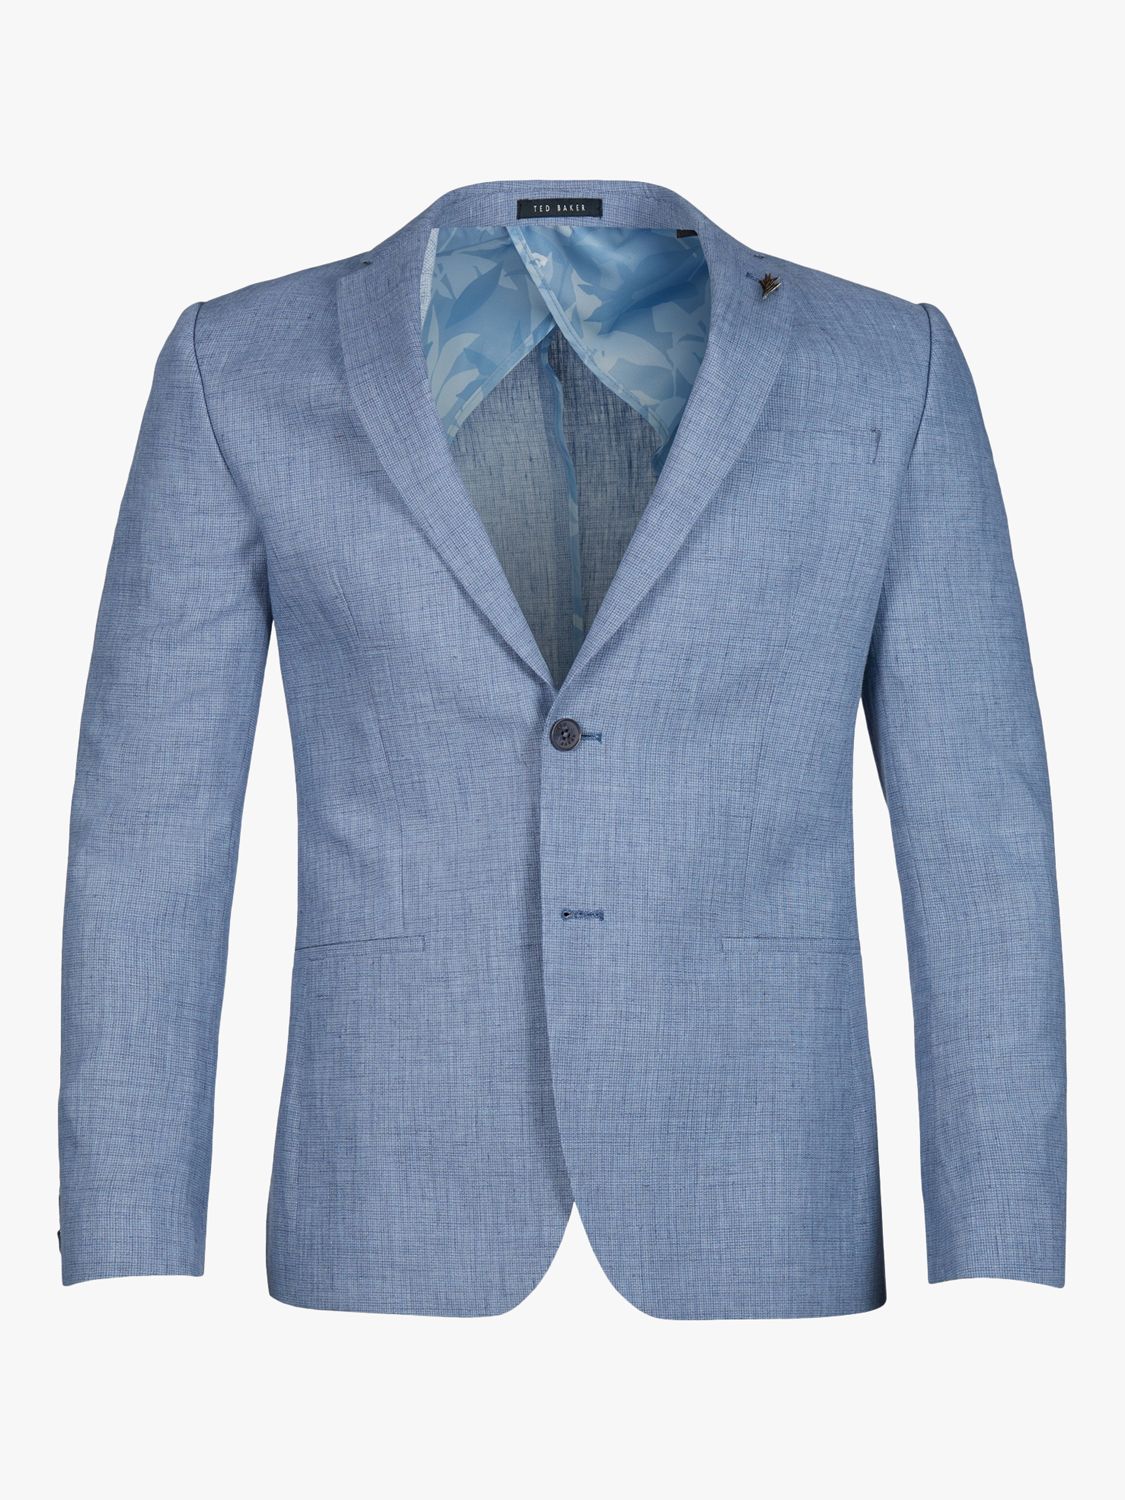 Ted Baker Hydra Linen Slim Fit Suit Jacket, Blue, 46R